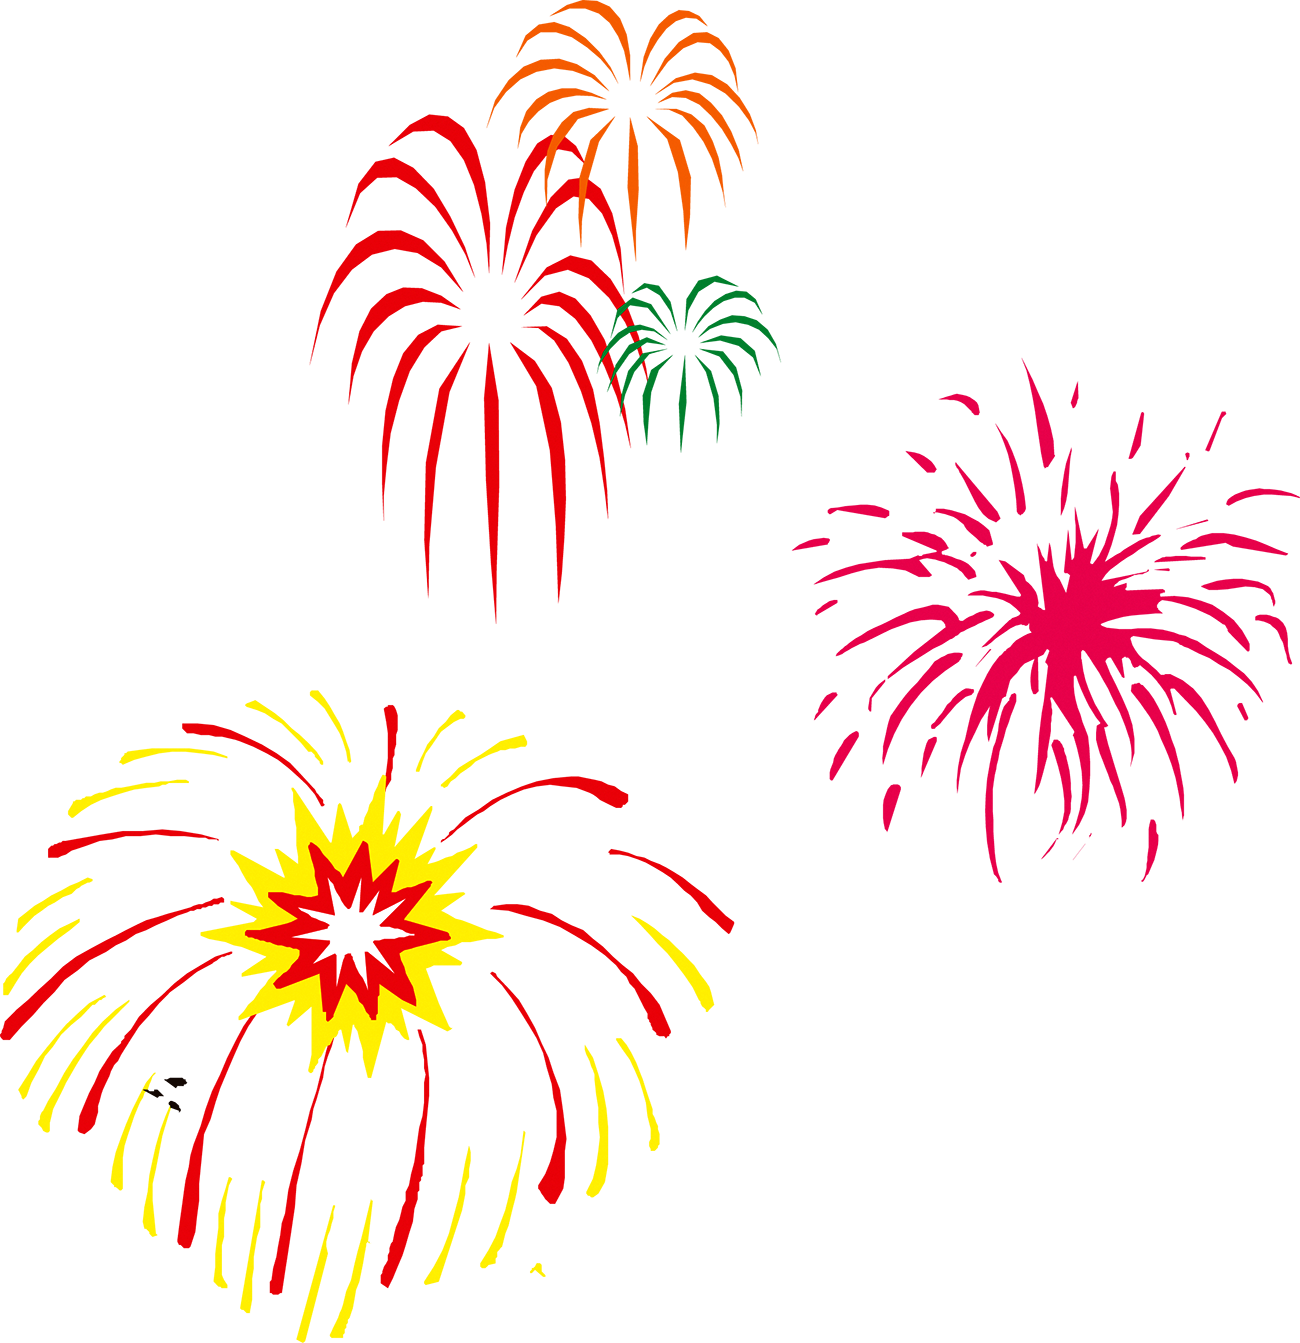 Colorful Fireworks Display Illustration